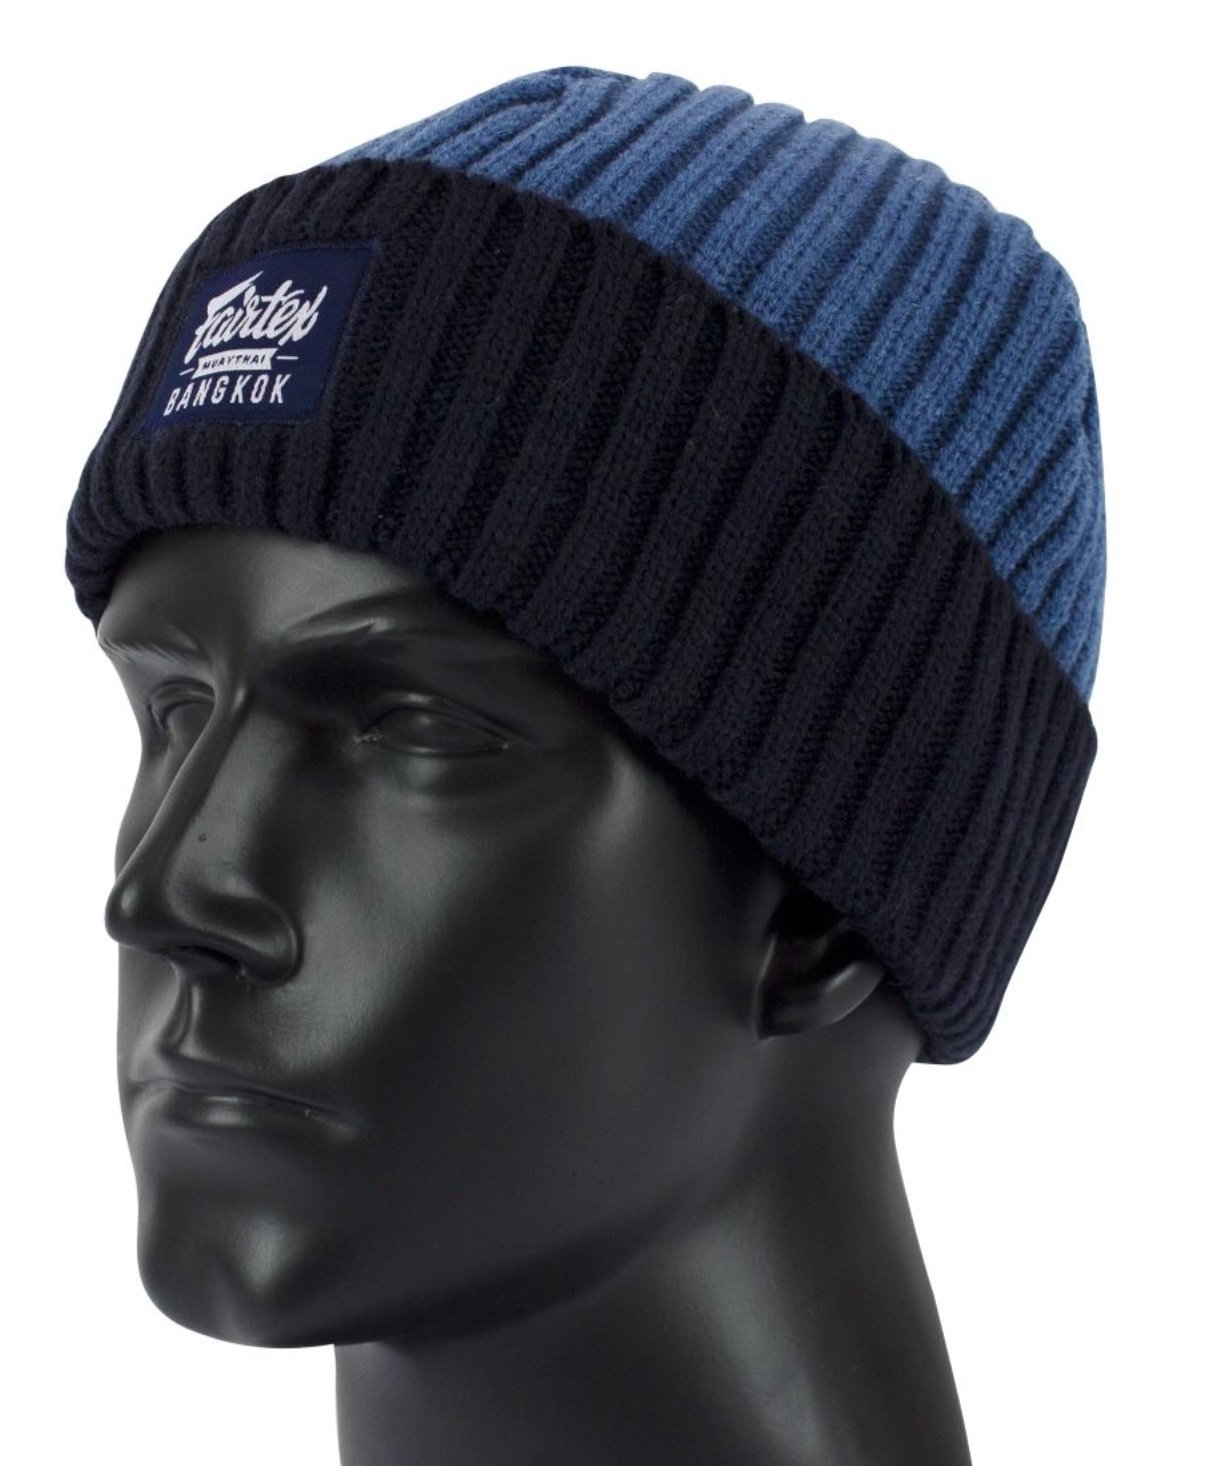 Fairtex Beanie Winter Hat - BN7 - Blue - Nylon Bag Packaging Included - image 5 of 6